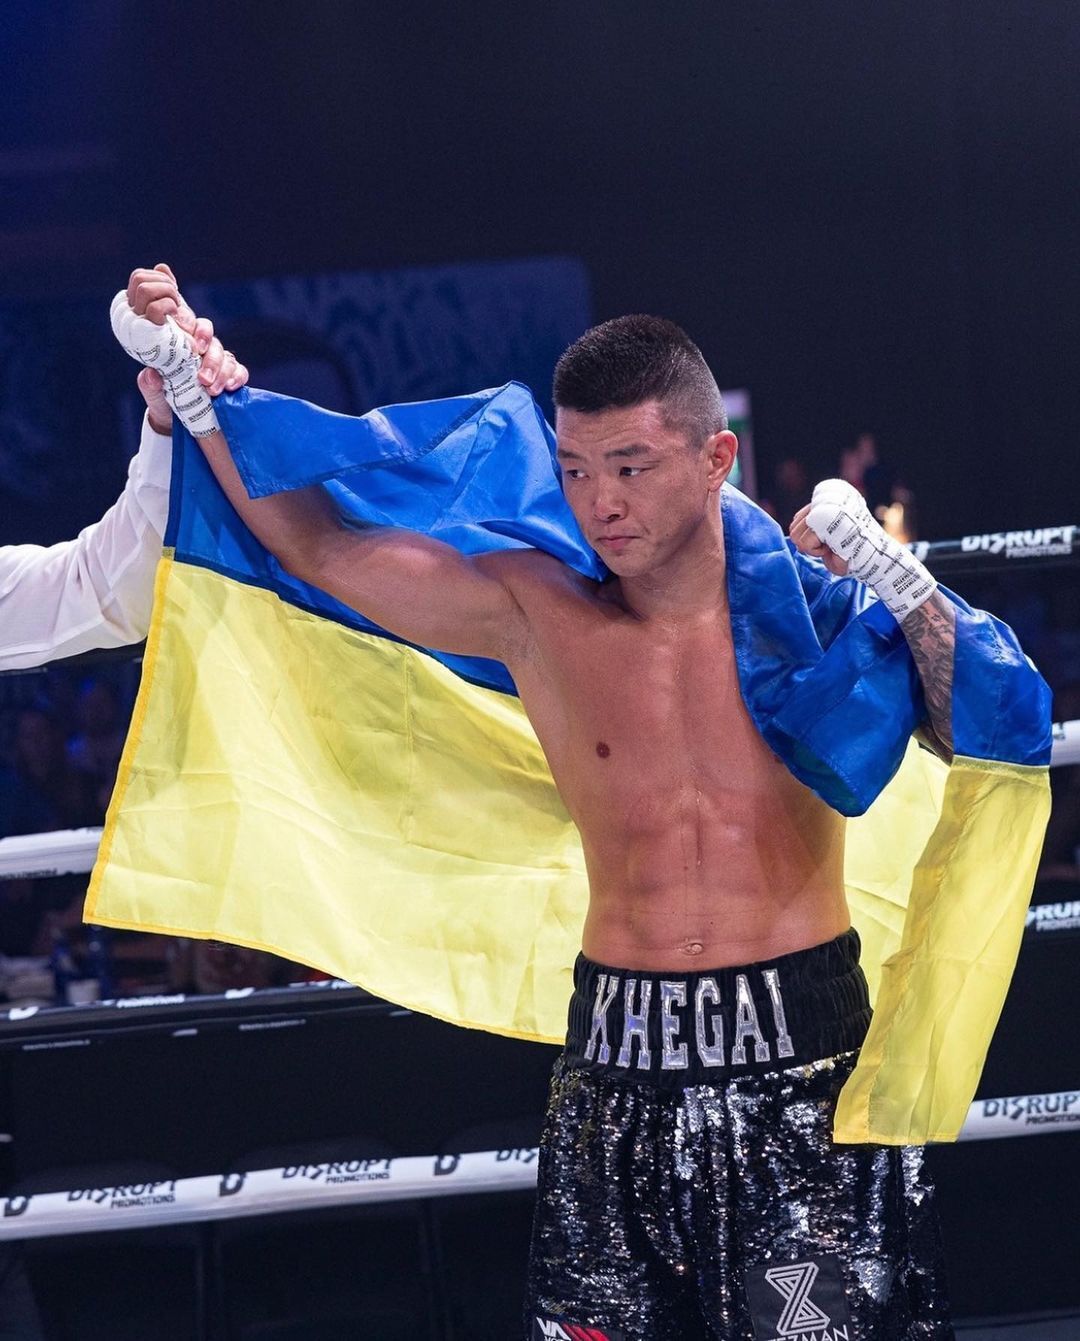 Famous Ukrainian boxer won the fight by knockout